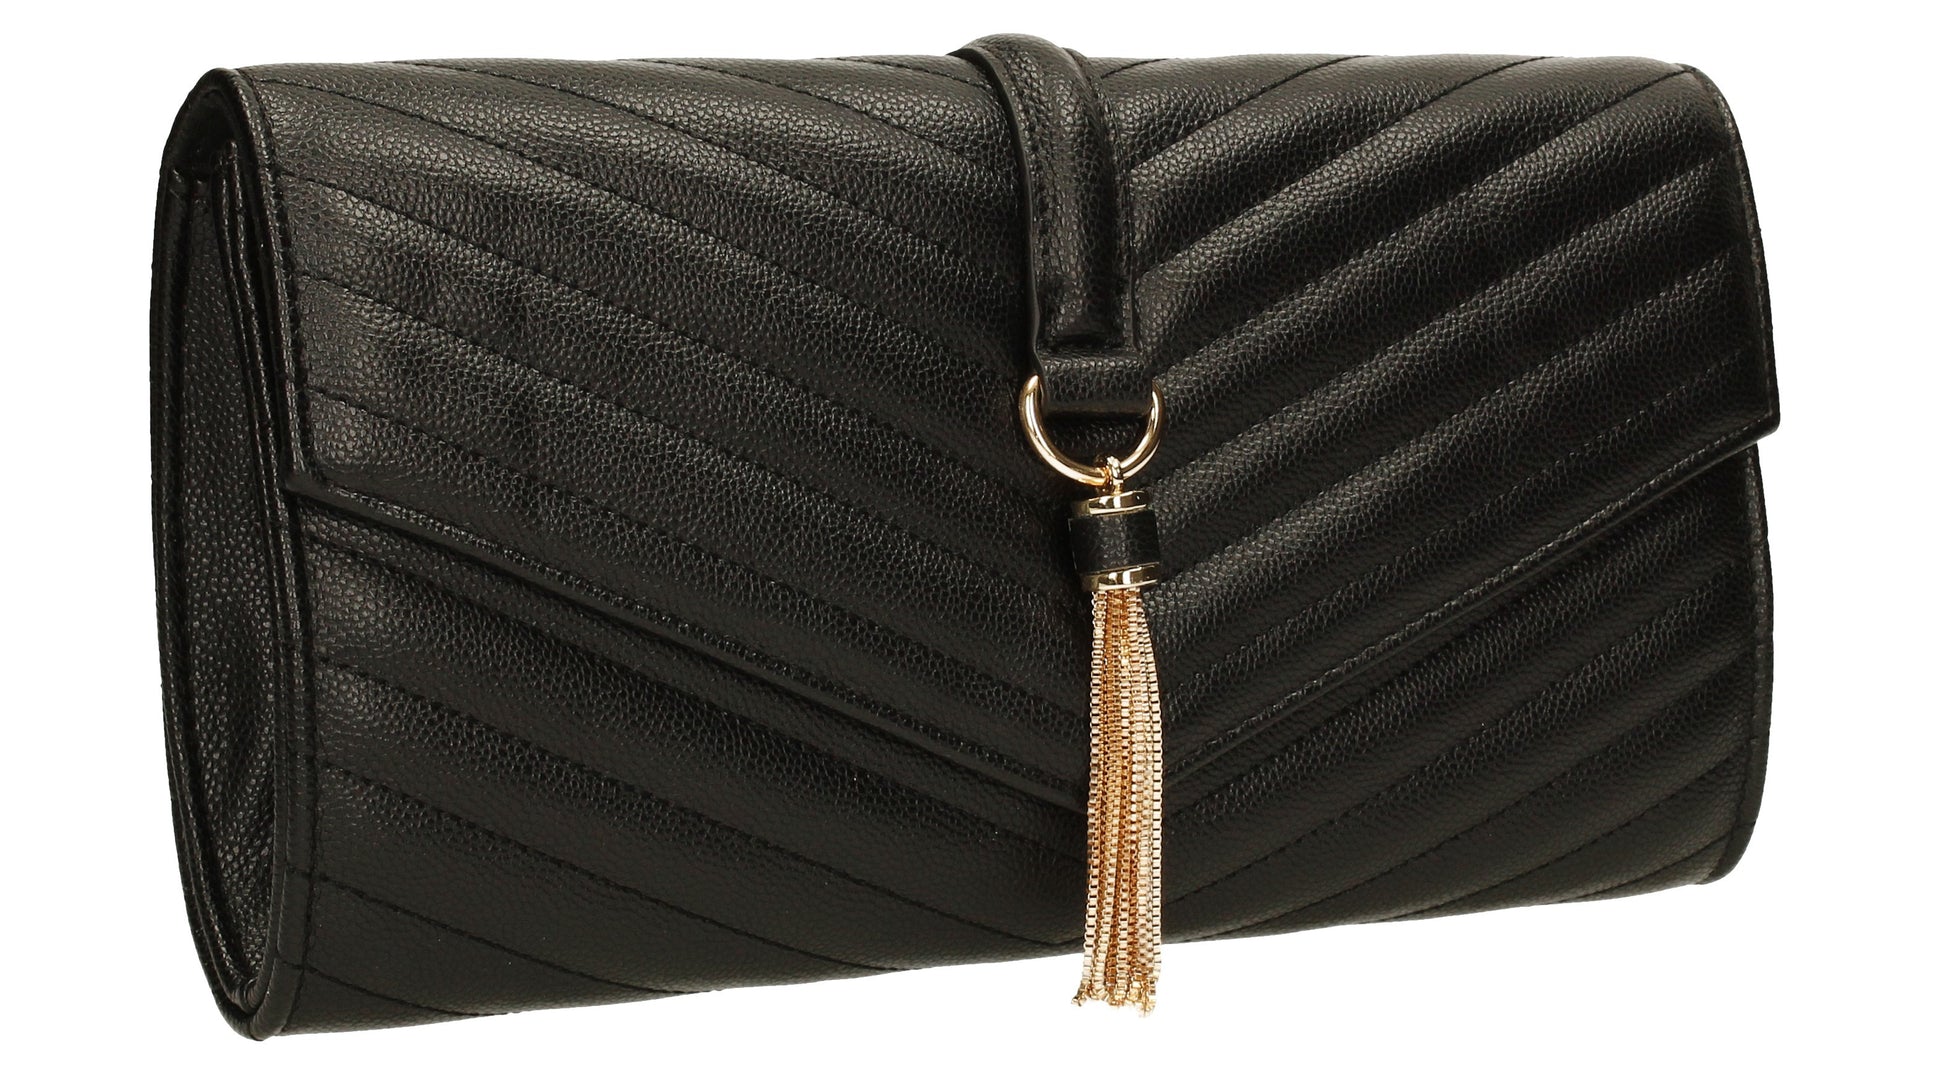 SWANKYSWANS Temperley Clutch Bag Black Cute Cheap Clutch Bag For Weddings School and Work